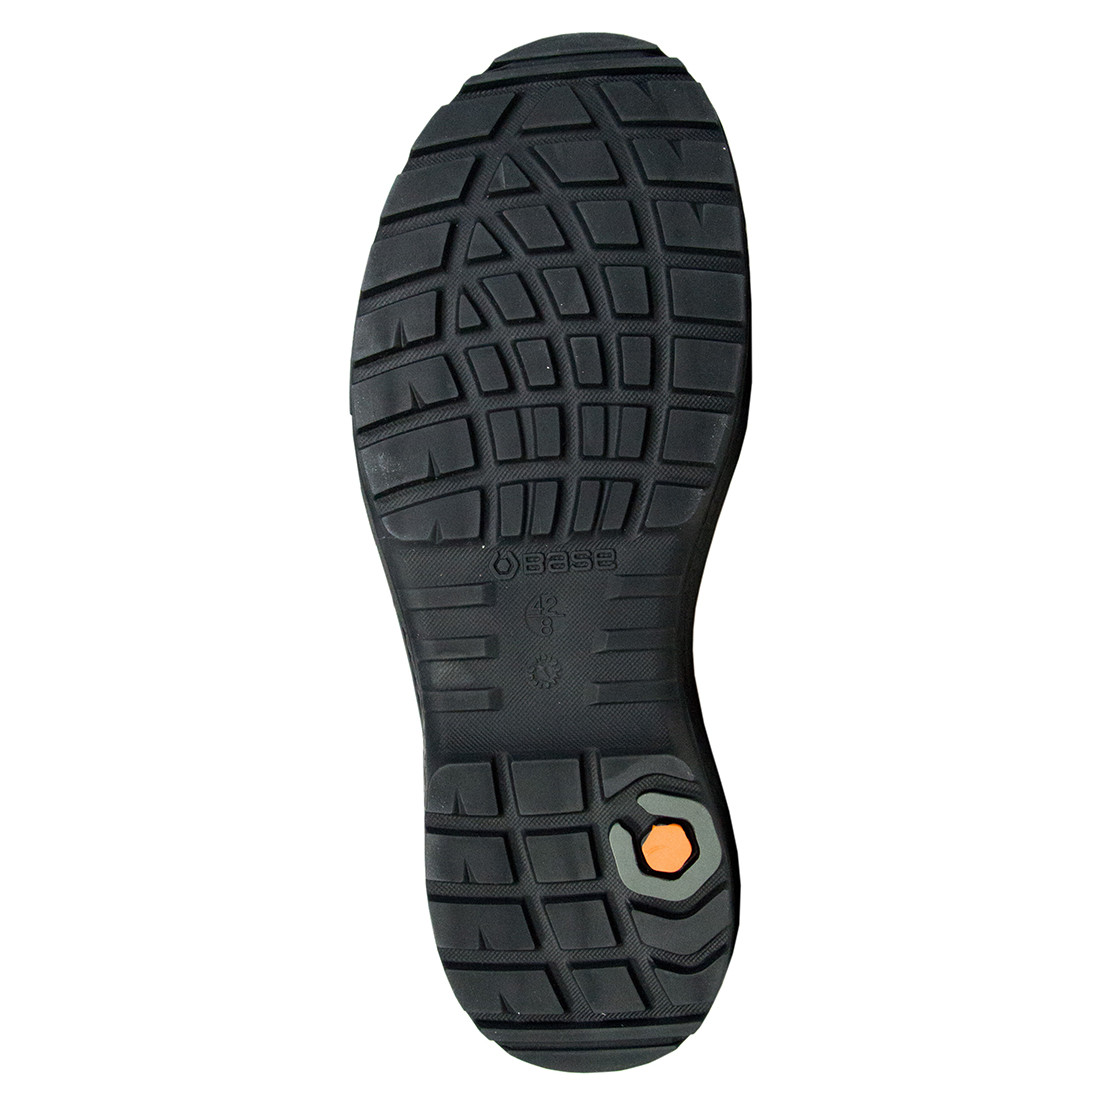 Pantofi Be-Strong S3 HRO CI HI - Incaltaminte de protectie | Bocanci, Pantofi, Sandale, Cizme